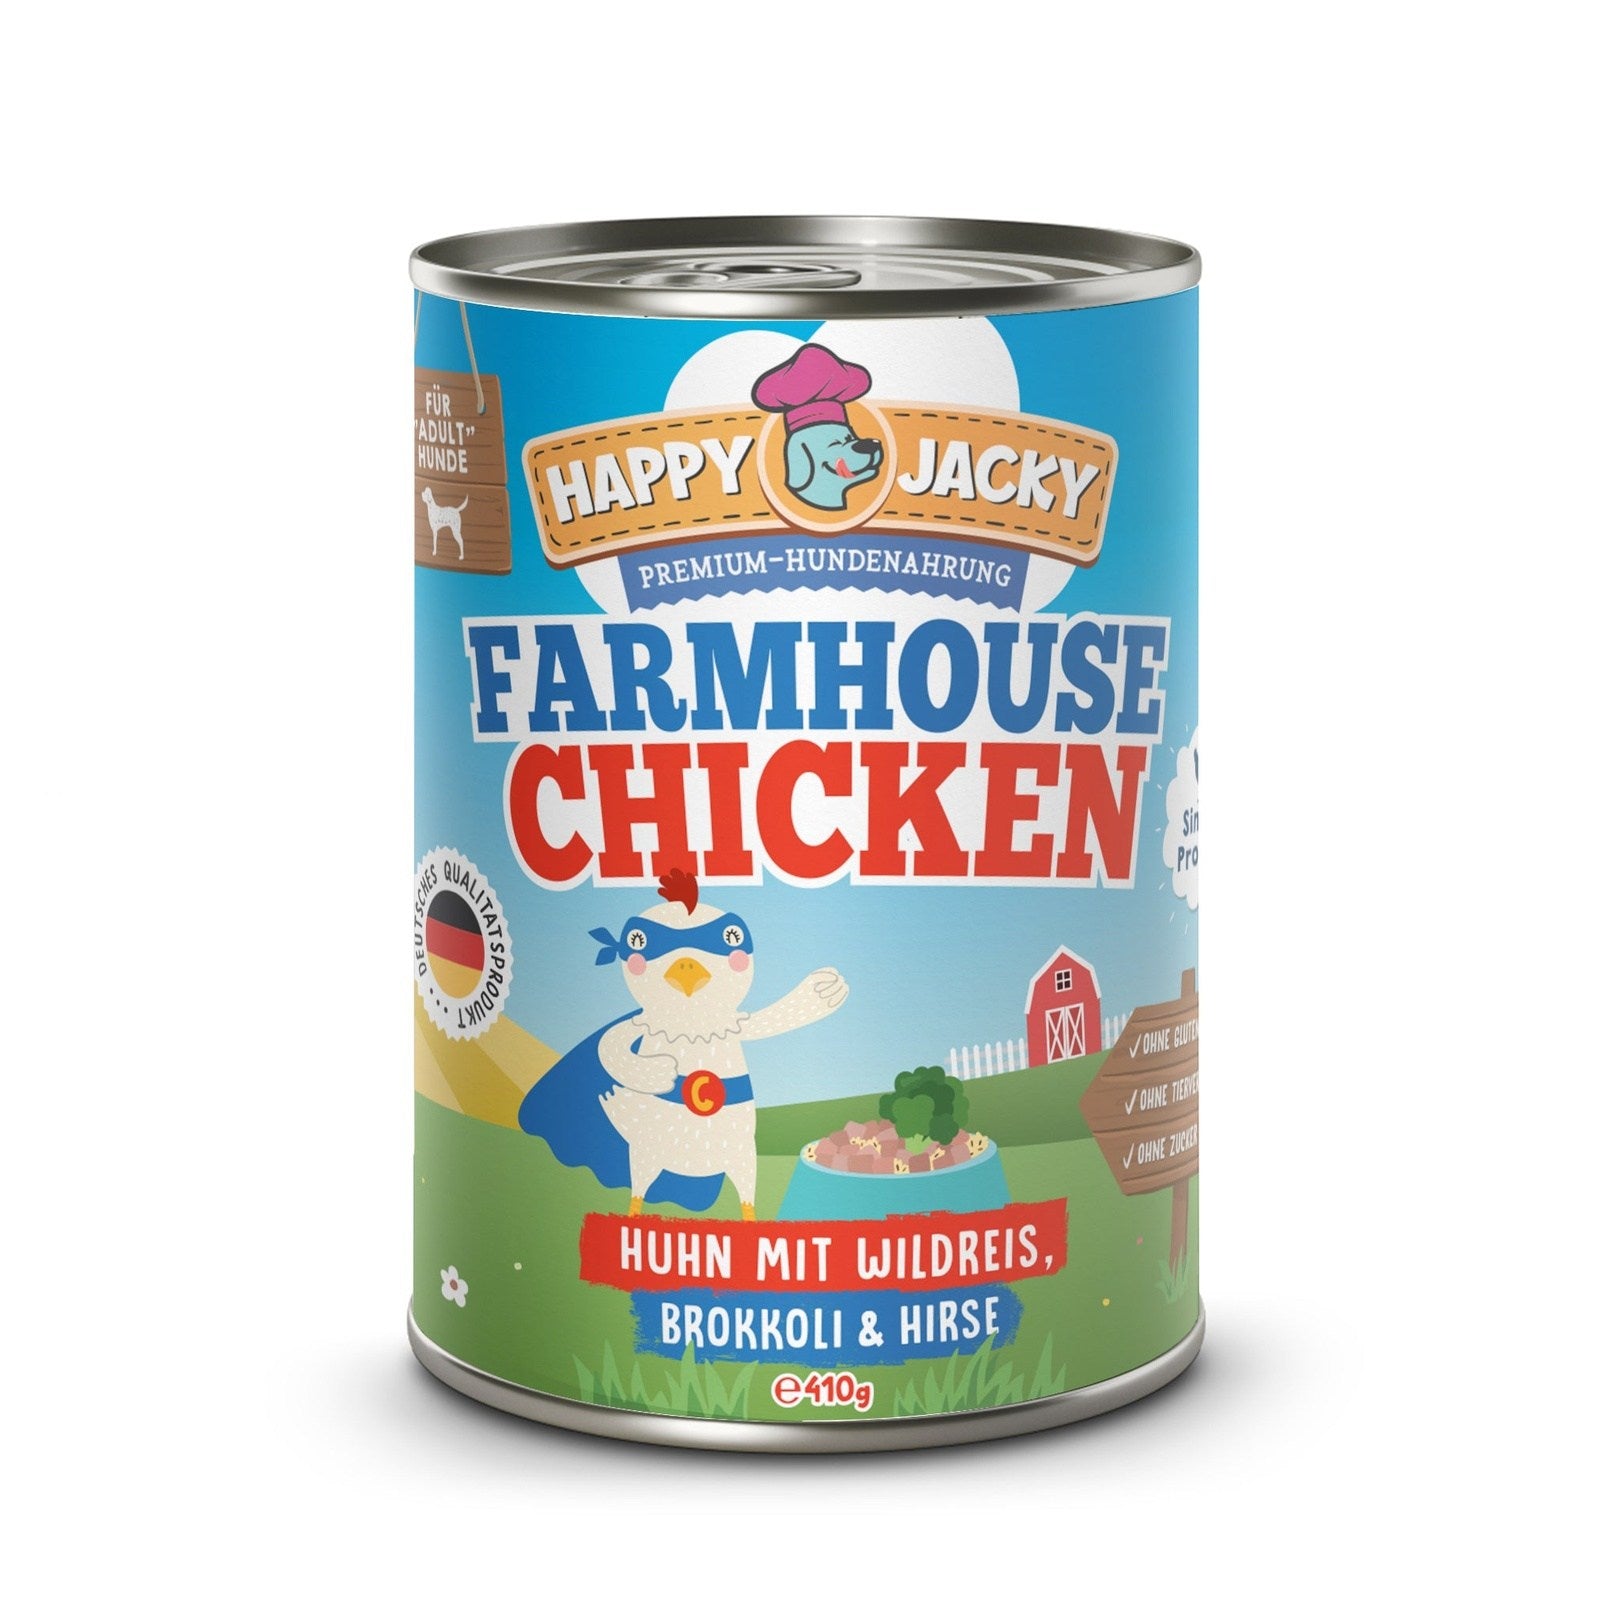 Farmhouse Chicken - Huhn mit Wildreis, Brokkoli & Hirse HAPPY JACKY